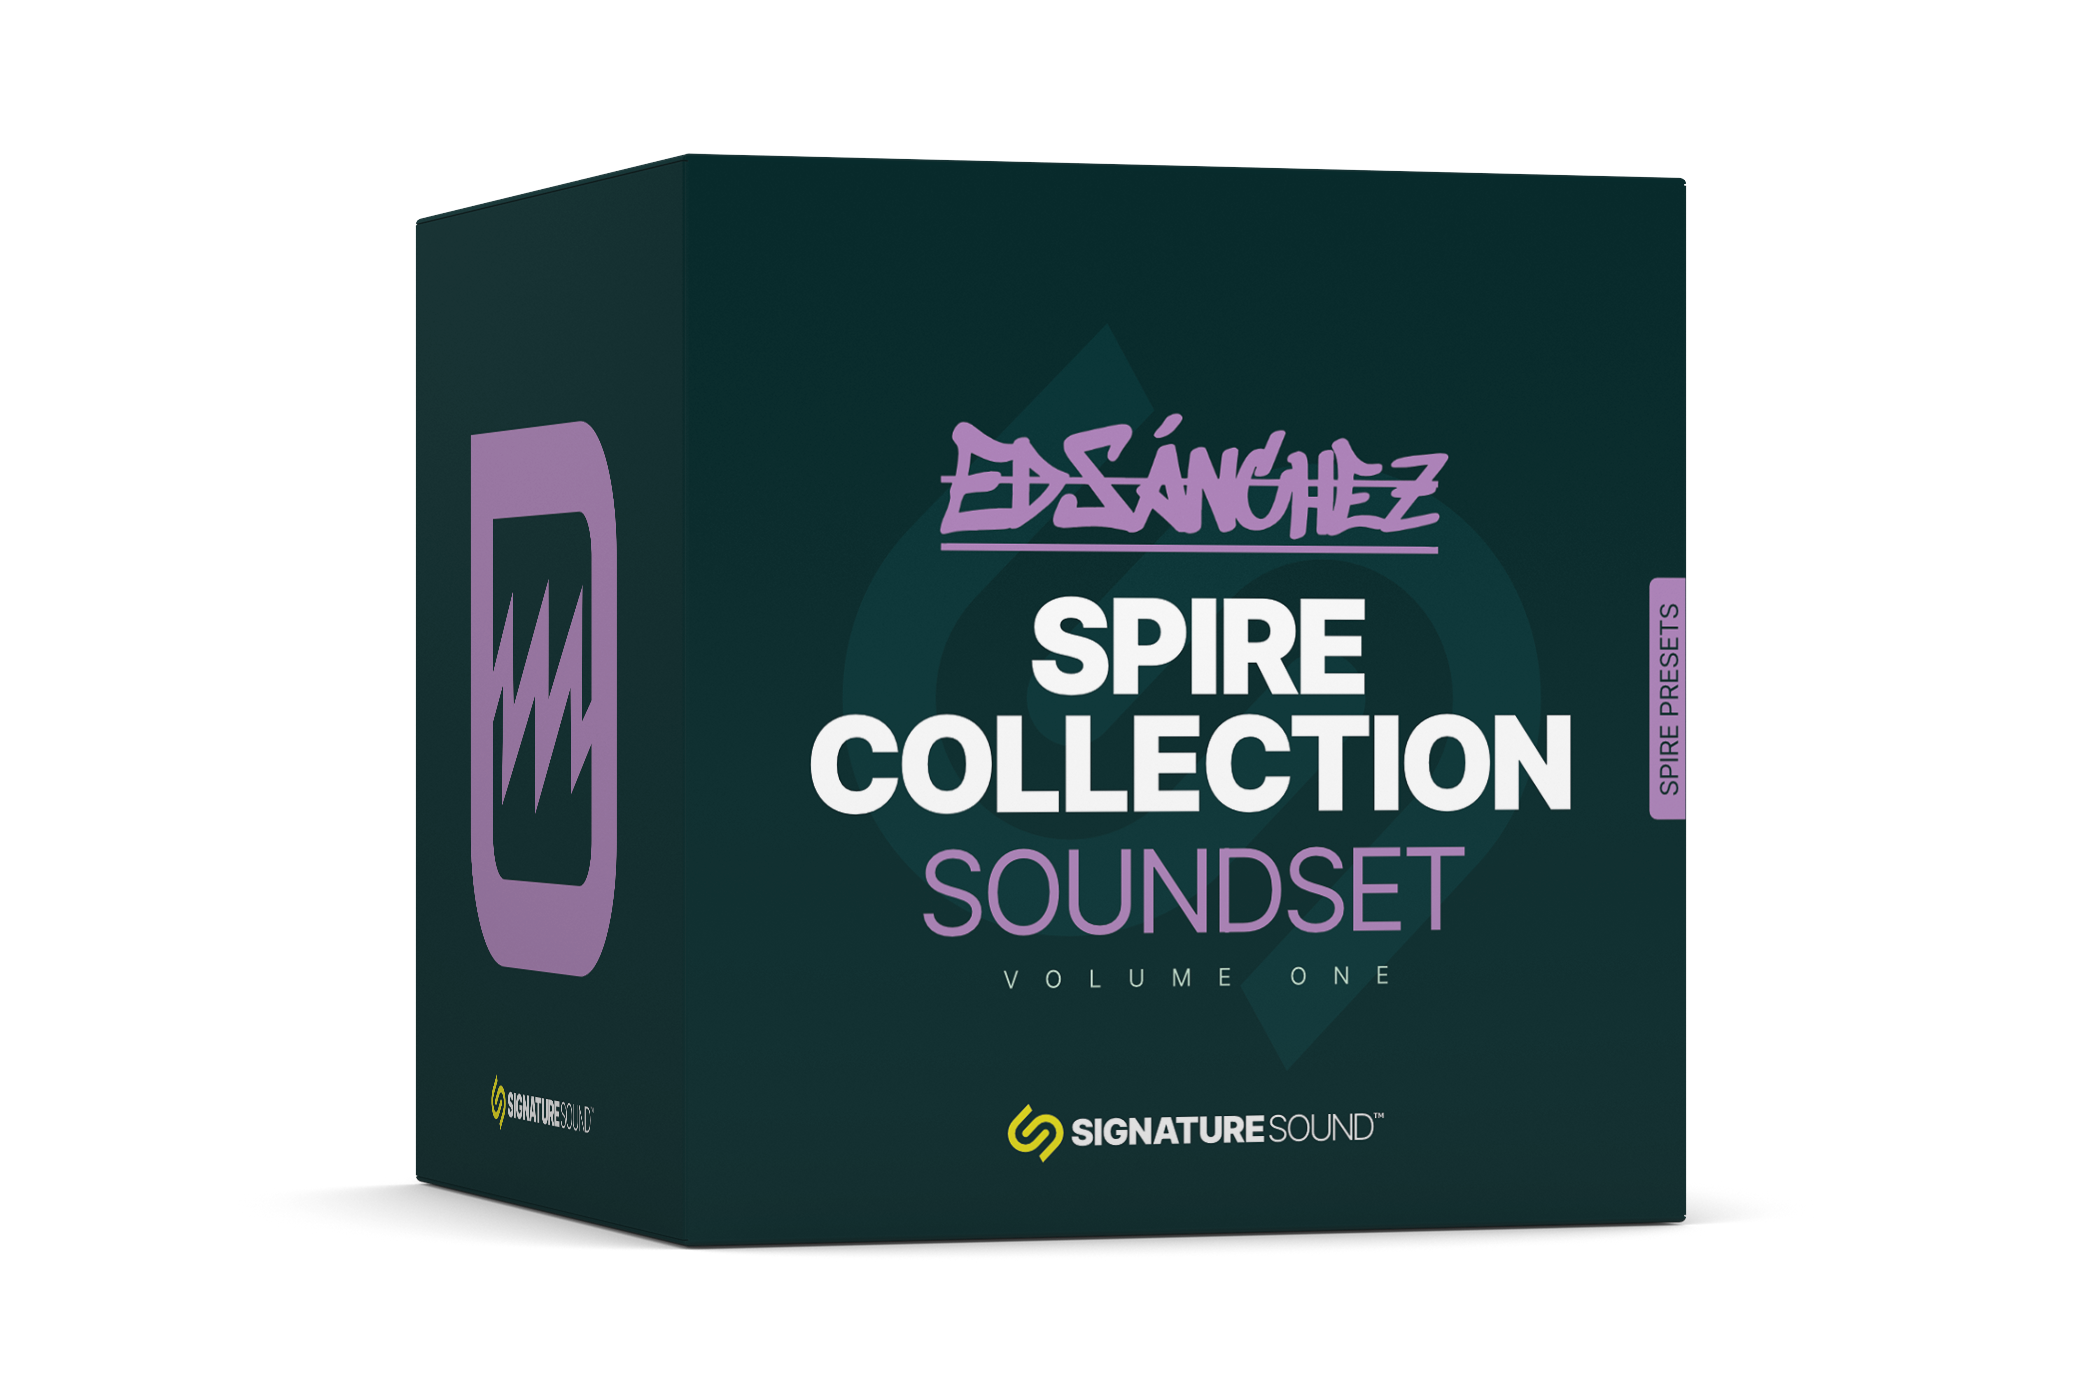 Ed Sánchez Spire Collection [Soundset] Volume One